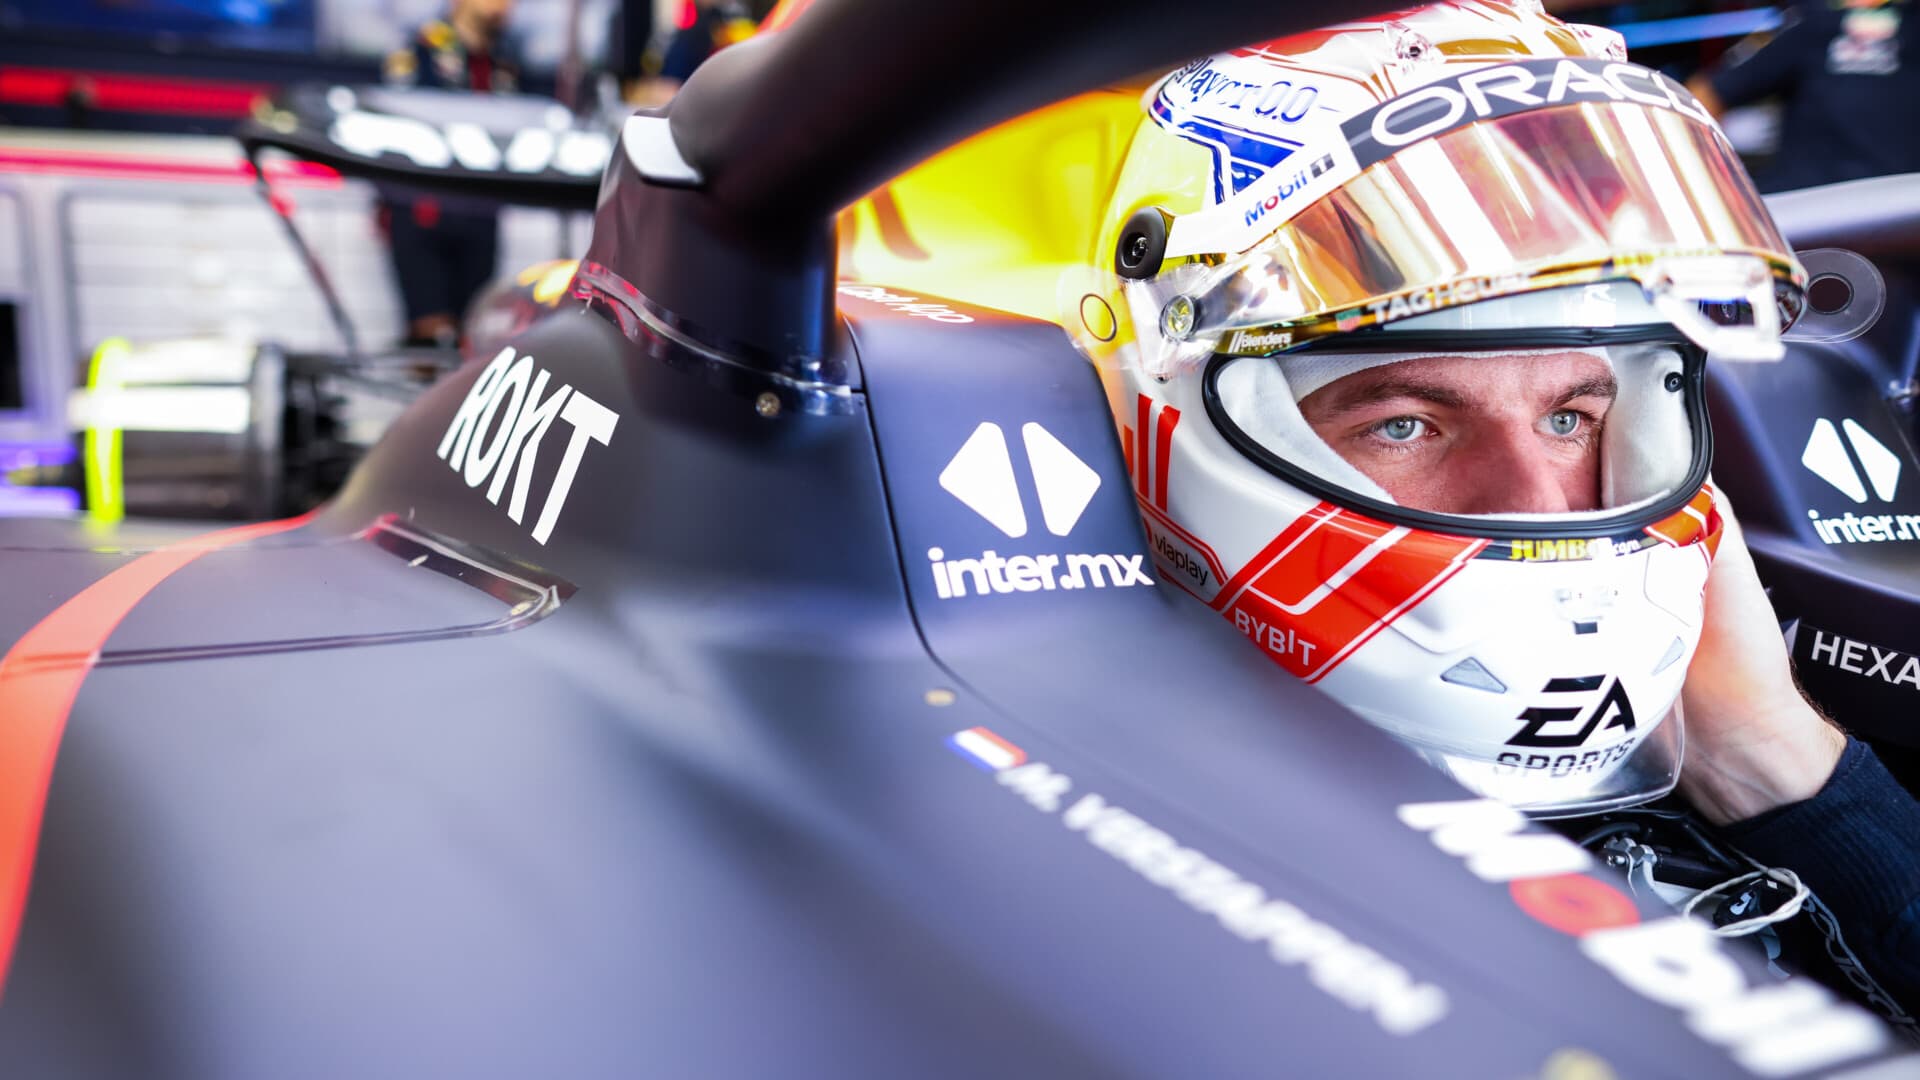 F1 Grand Prix Of Bahrain Practice - Max Verstappen